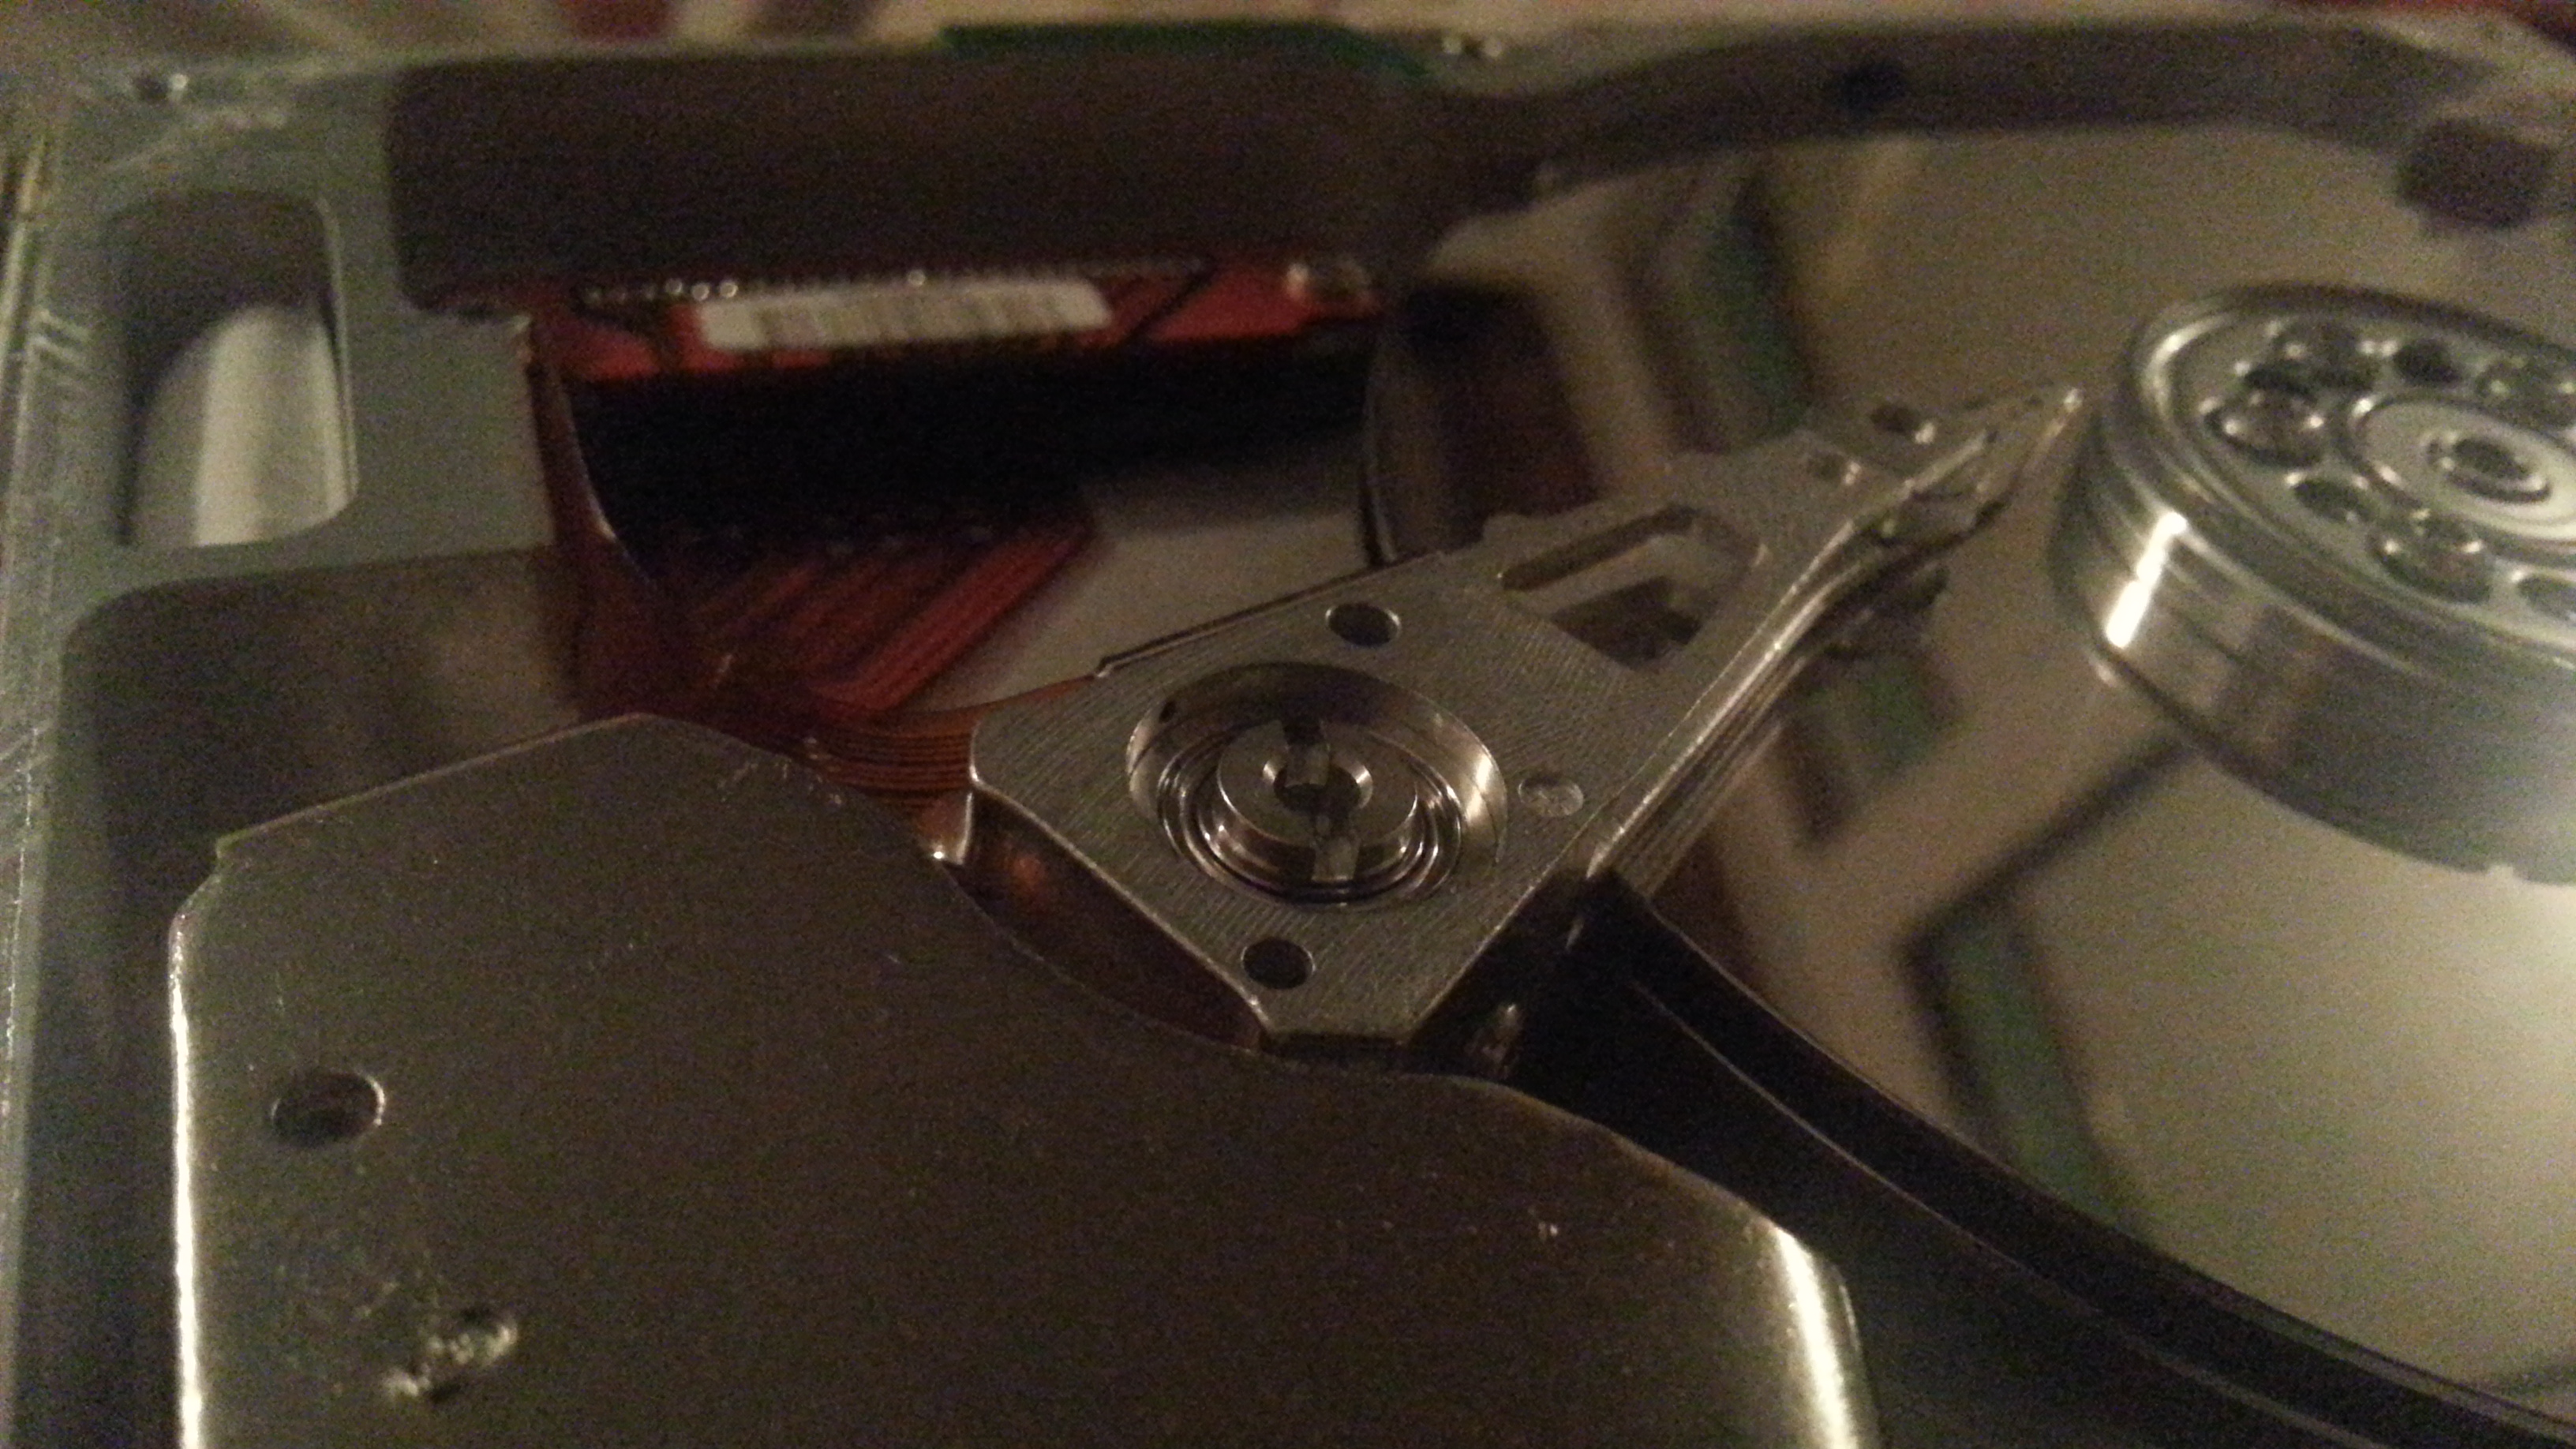 Inside of a 3.5" hard drive